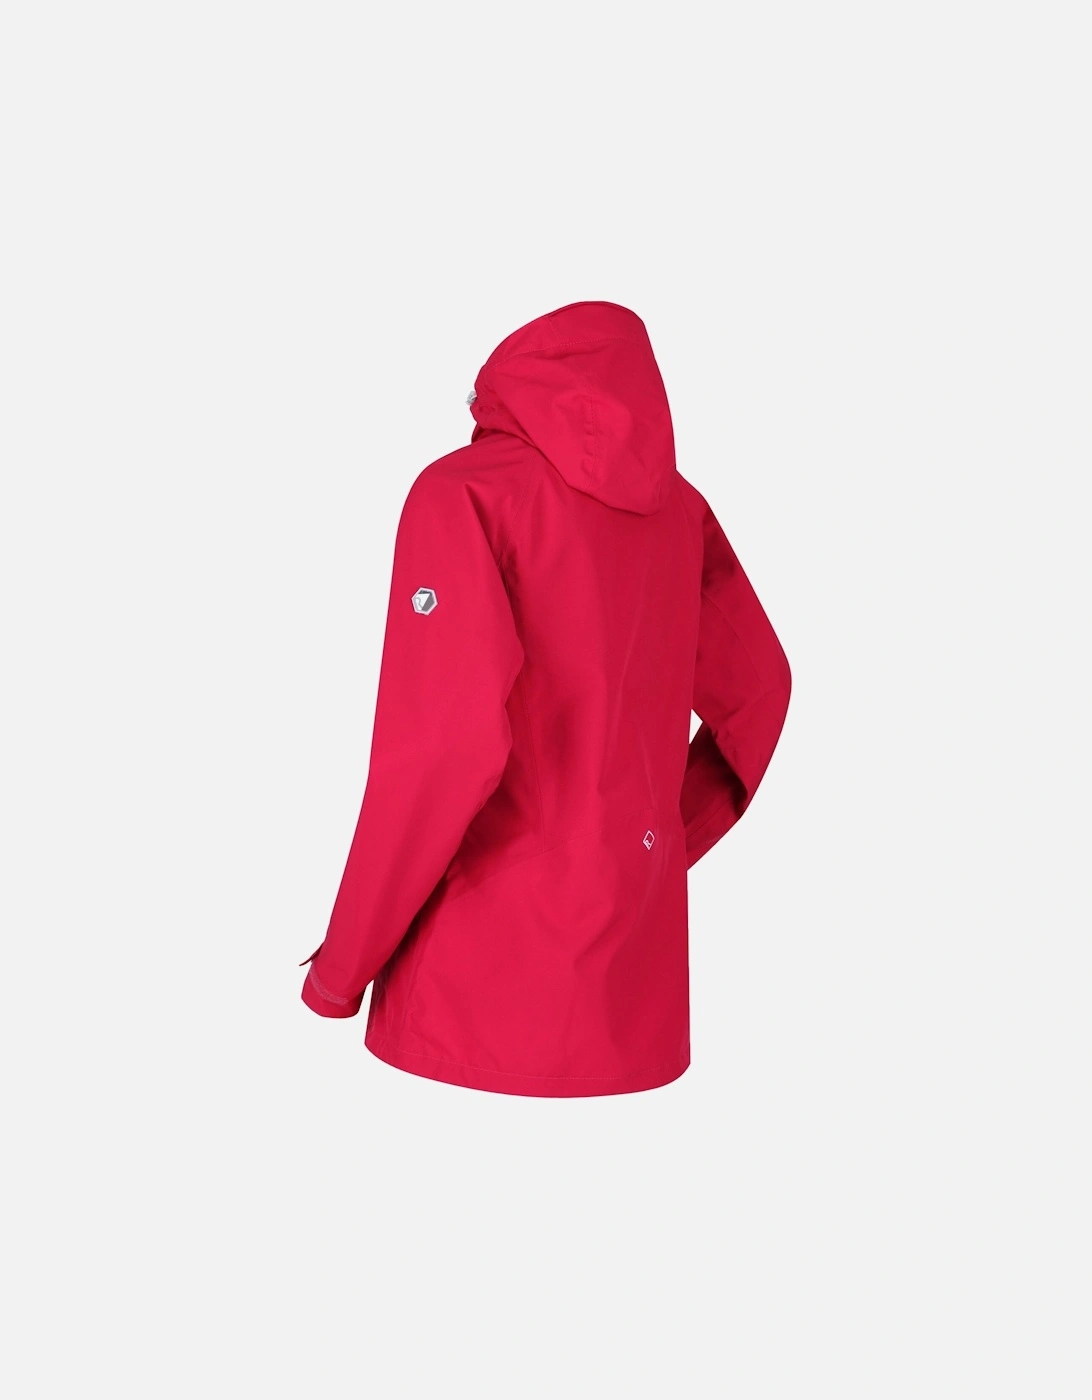 Womens/Ladies Birchdale Waterproof Shell Jacket